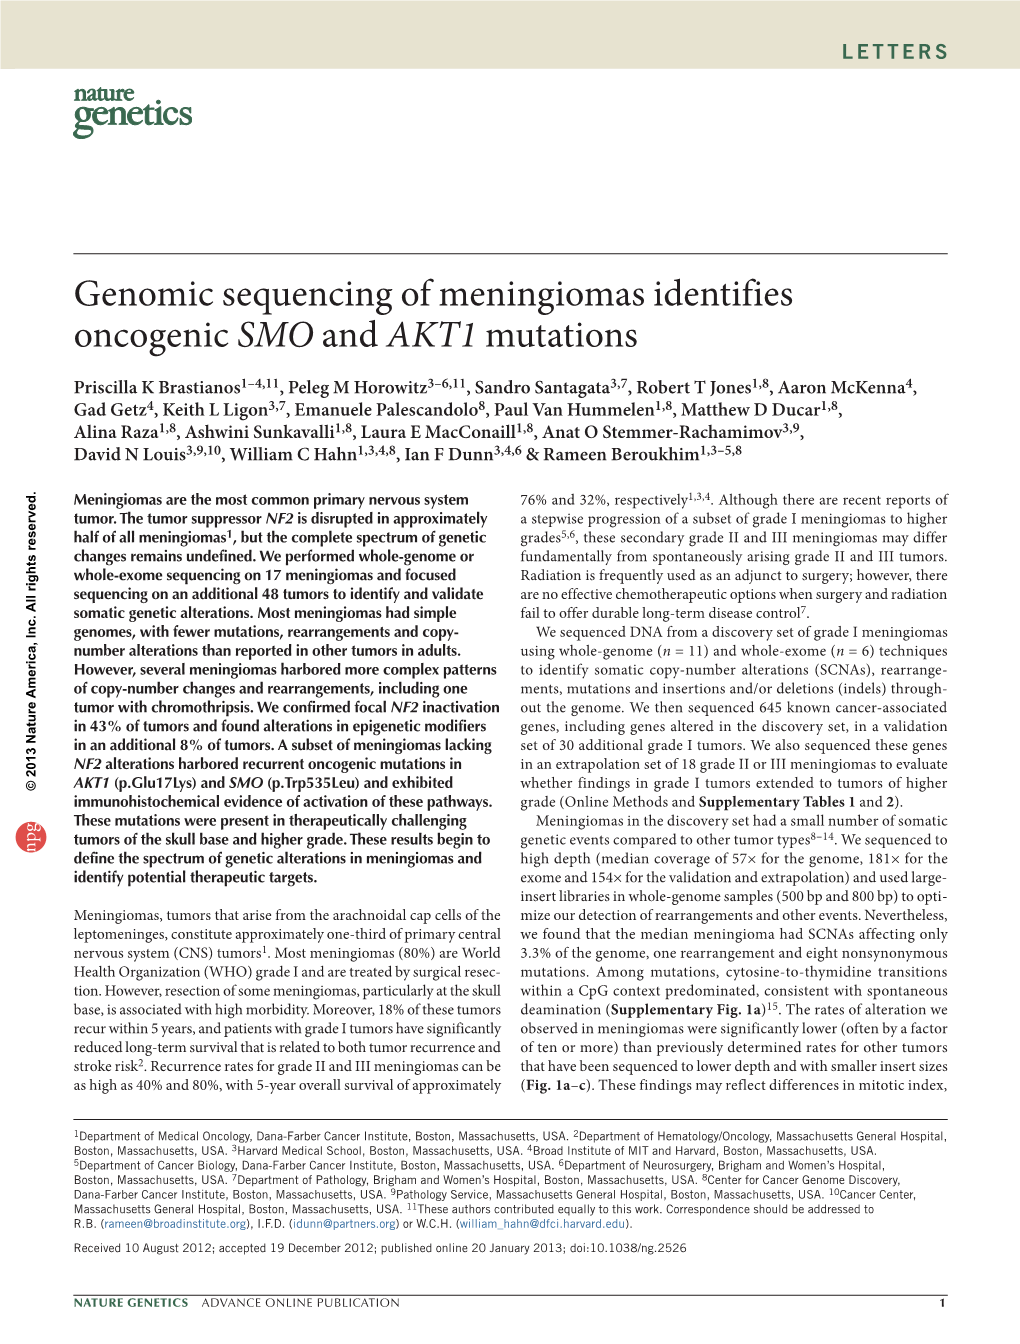 Genomic Sequencing of Meningiomas Identifies Oncogenic SMO and AKT1 Mutations